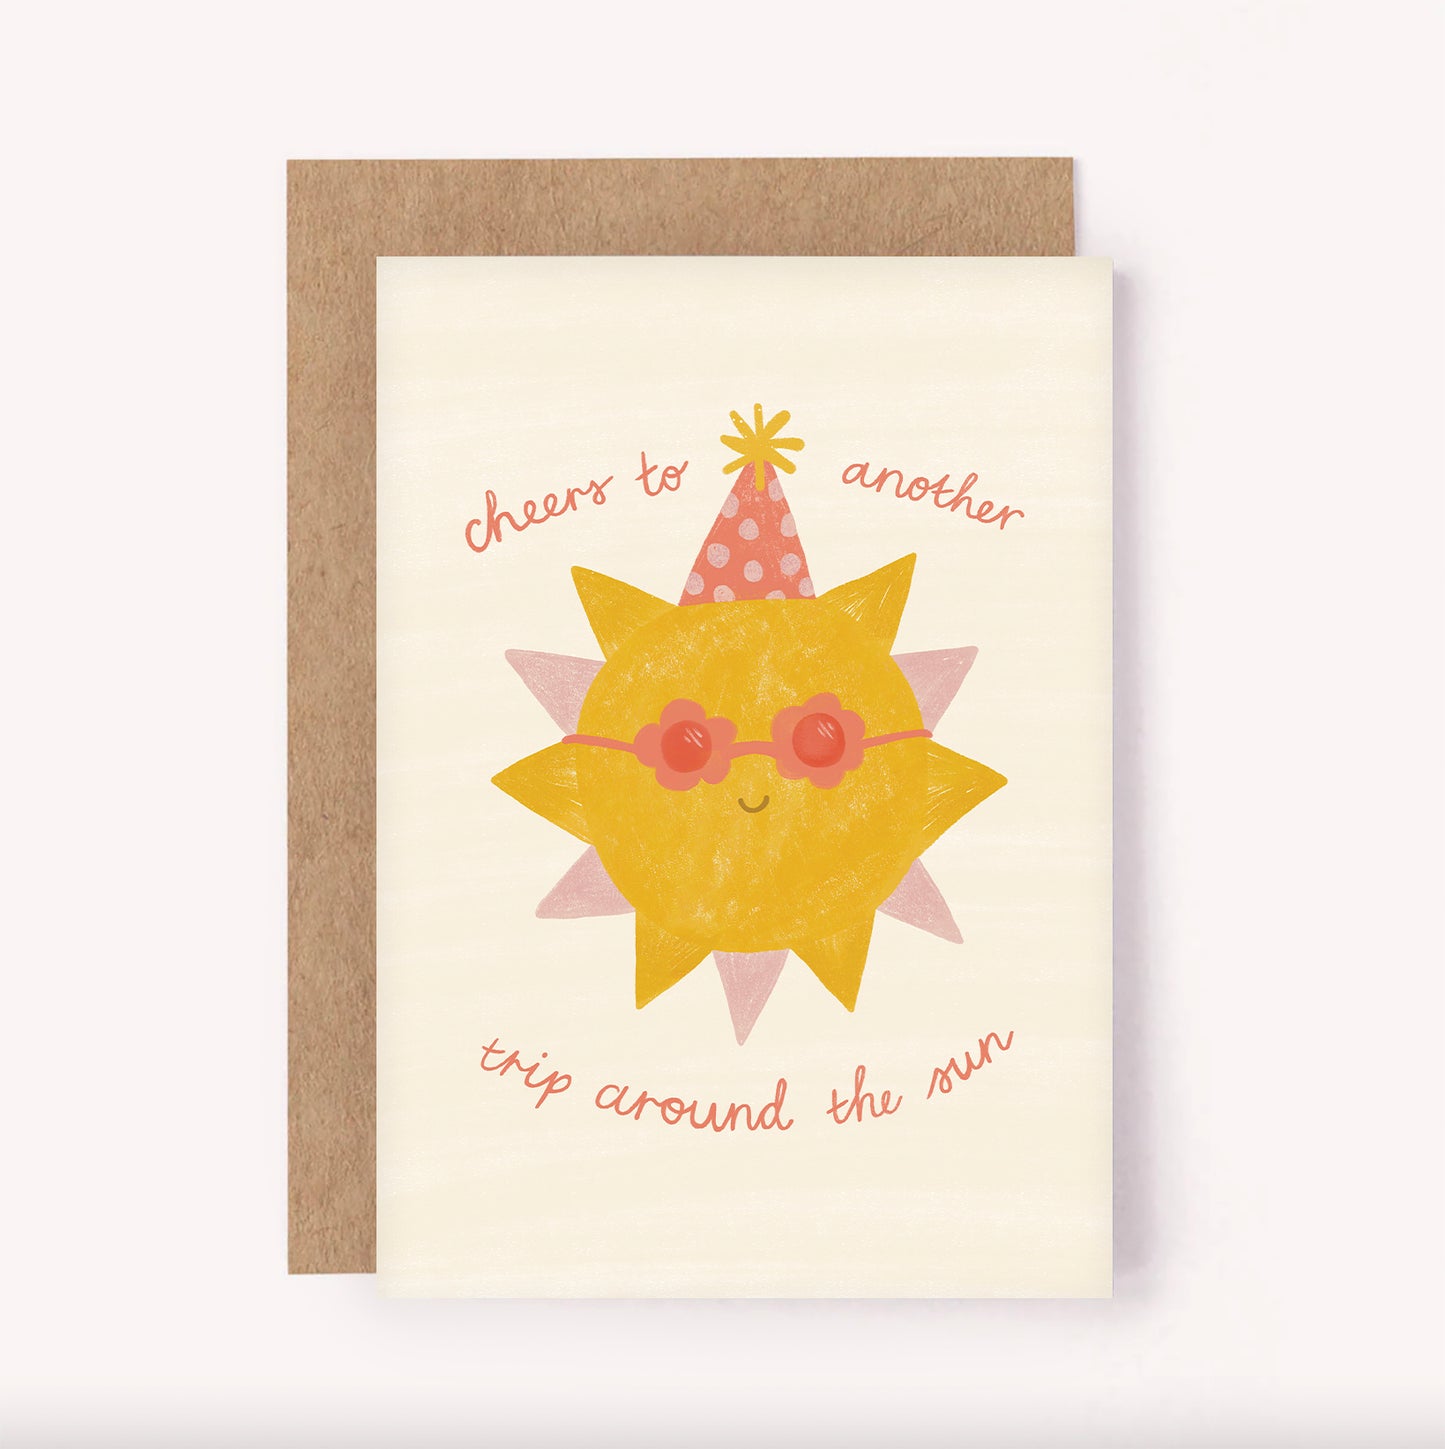 "Another Trip Around the Sun" - Cute Sunshine Birthday Card